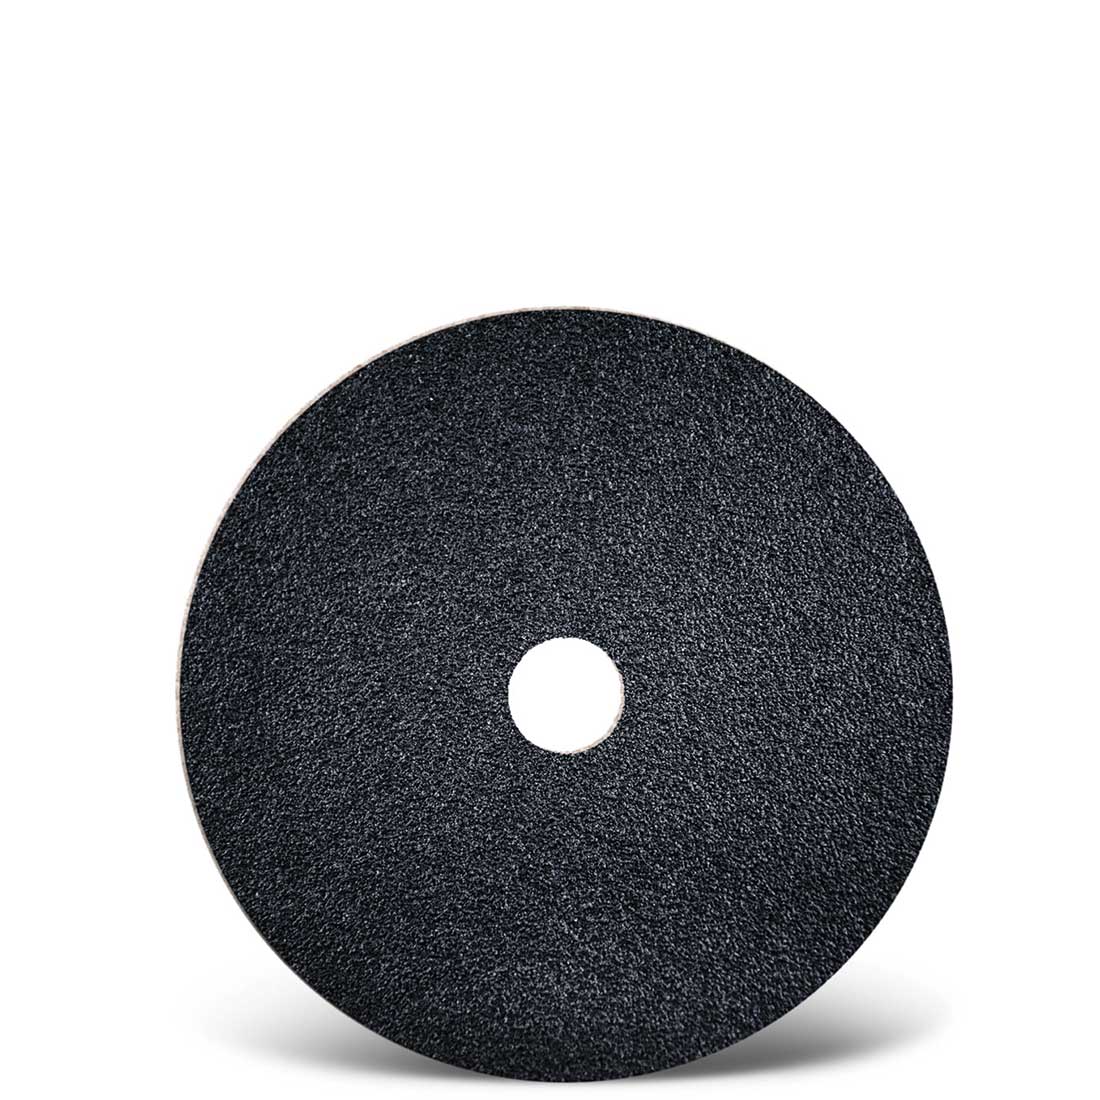 MENZER dual sanding discs for orbital floor sanders, G16–36, Ø 406 mm / doublesided / silicon carbide